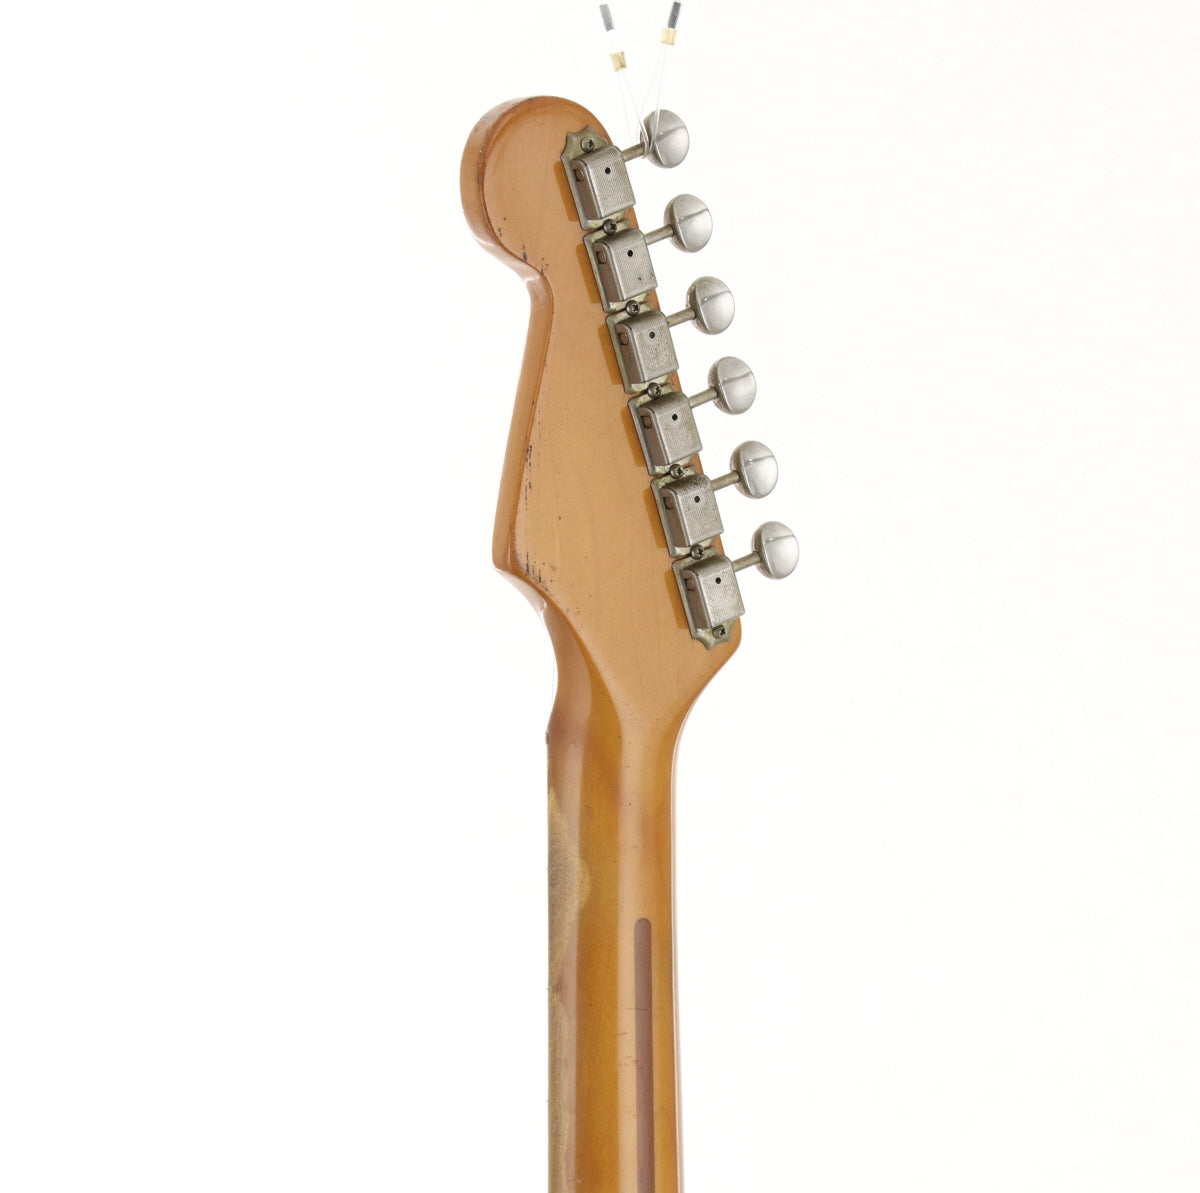 [SN V041064] USED FENDER USA / American Vintage 57 Stratocaster 2CS [03]